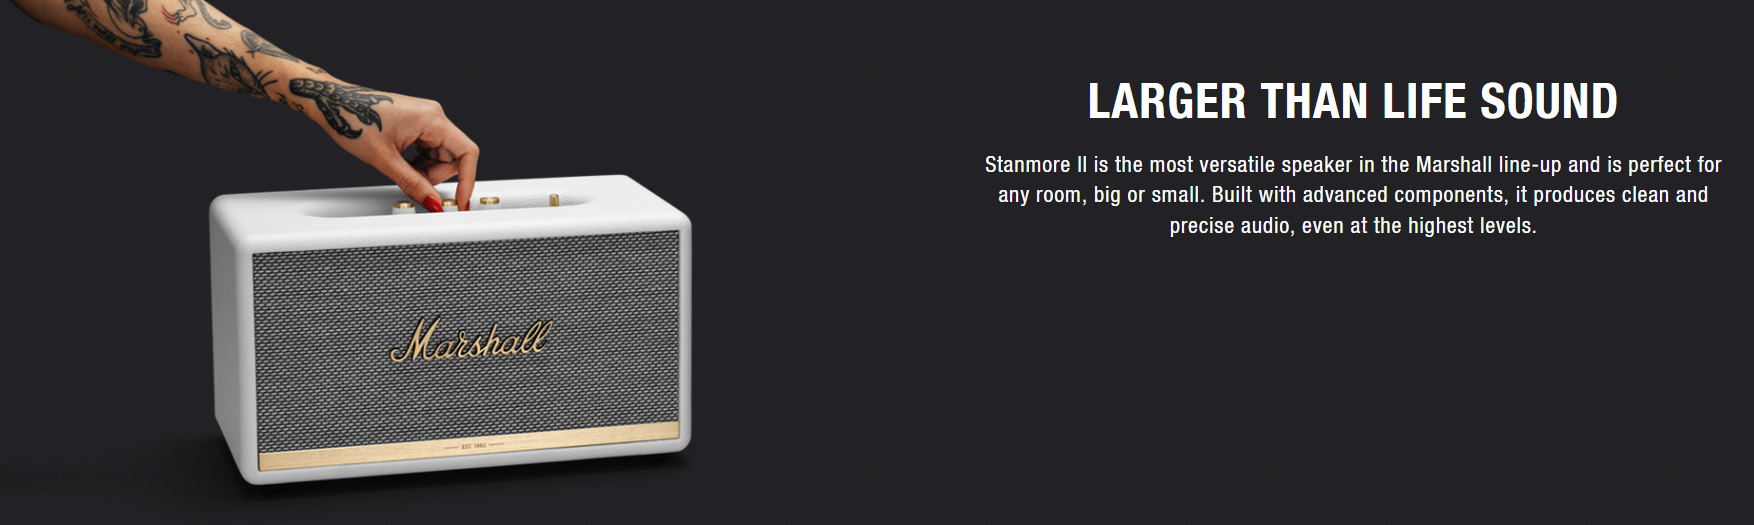 Marshall Stanmore II Bluetooth Speaker - Black / White (1 Year Warranty)